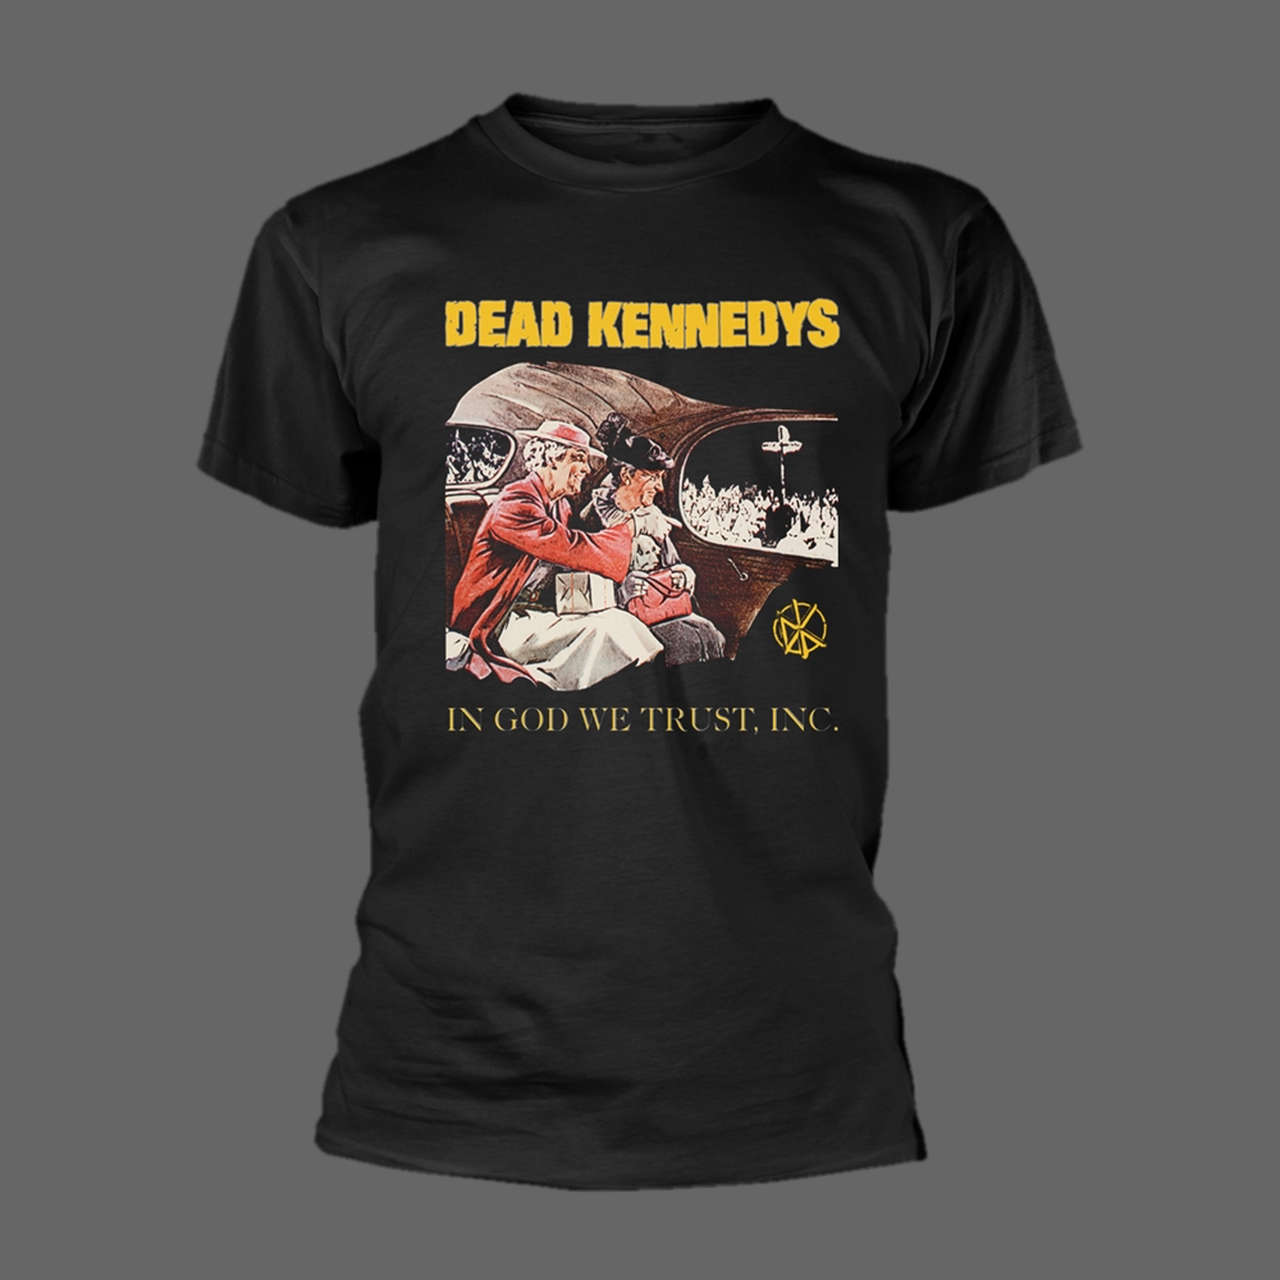 Dead Kennedys - In God We Trust, Inc (T-Shirt)